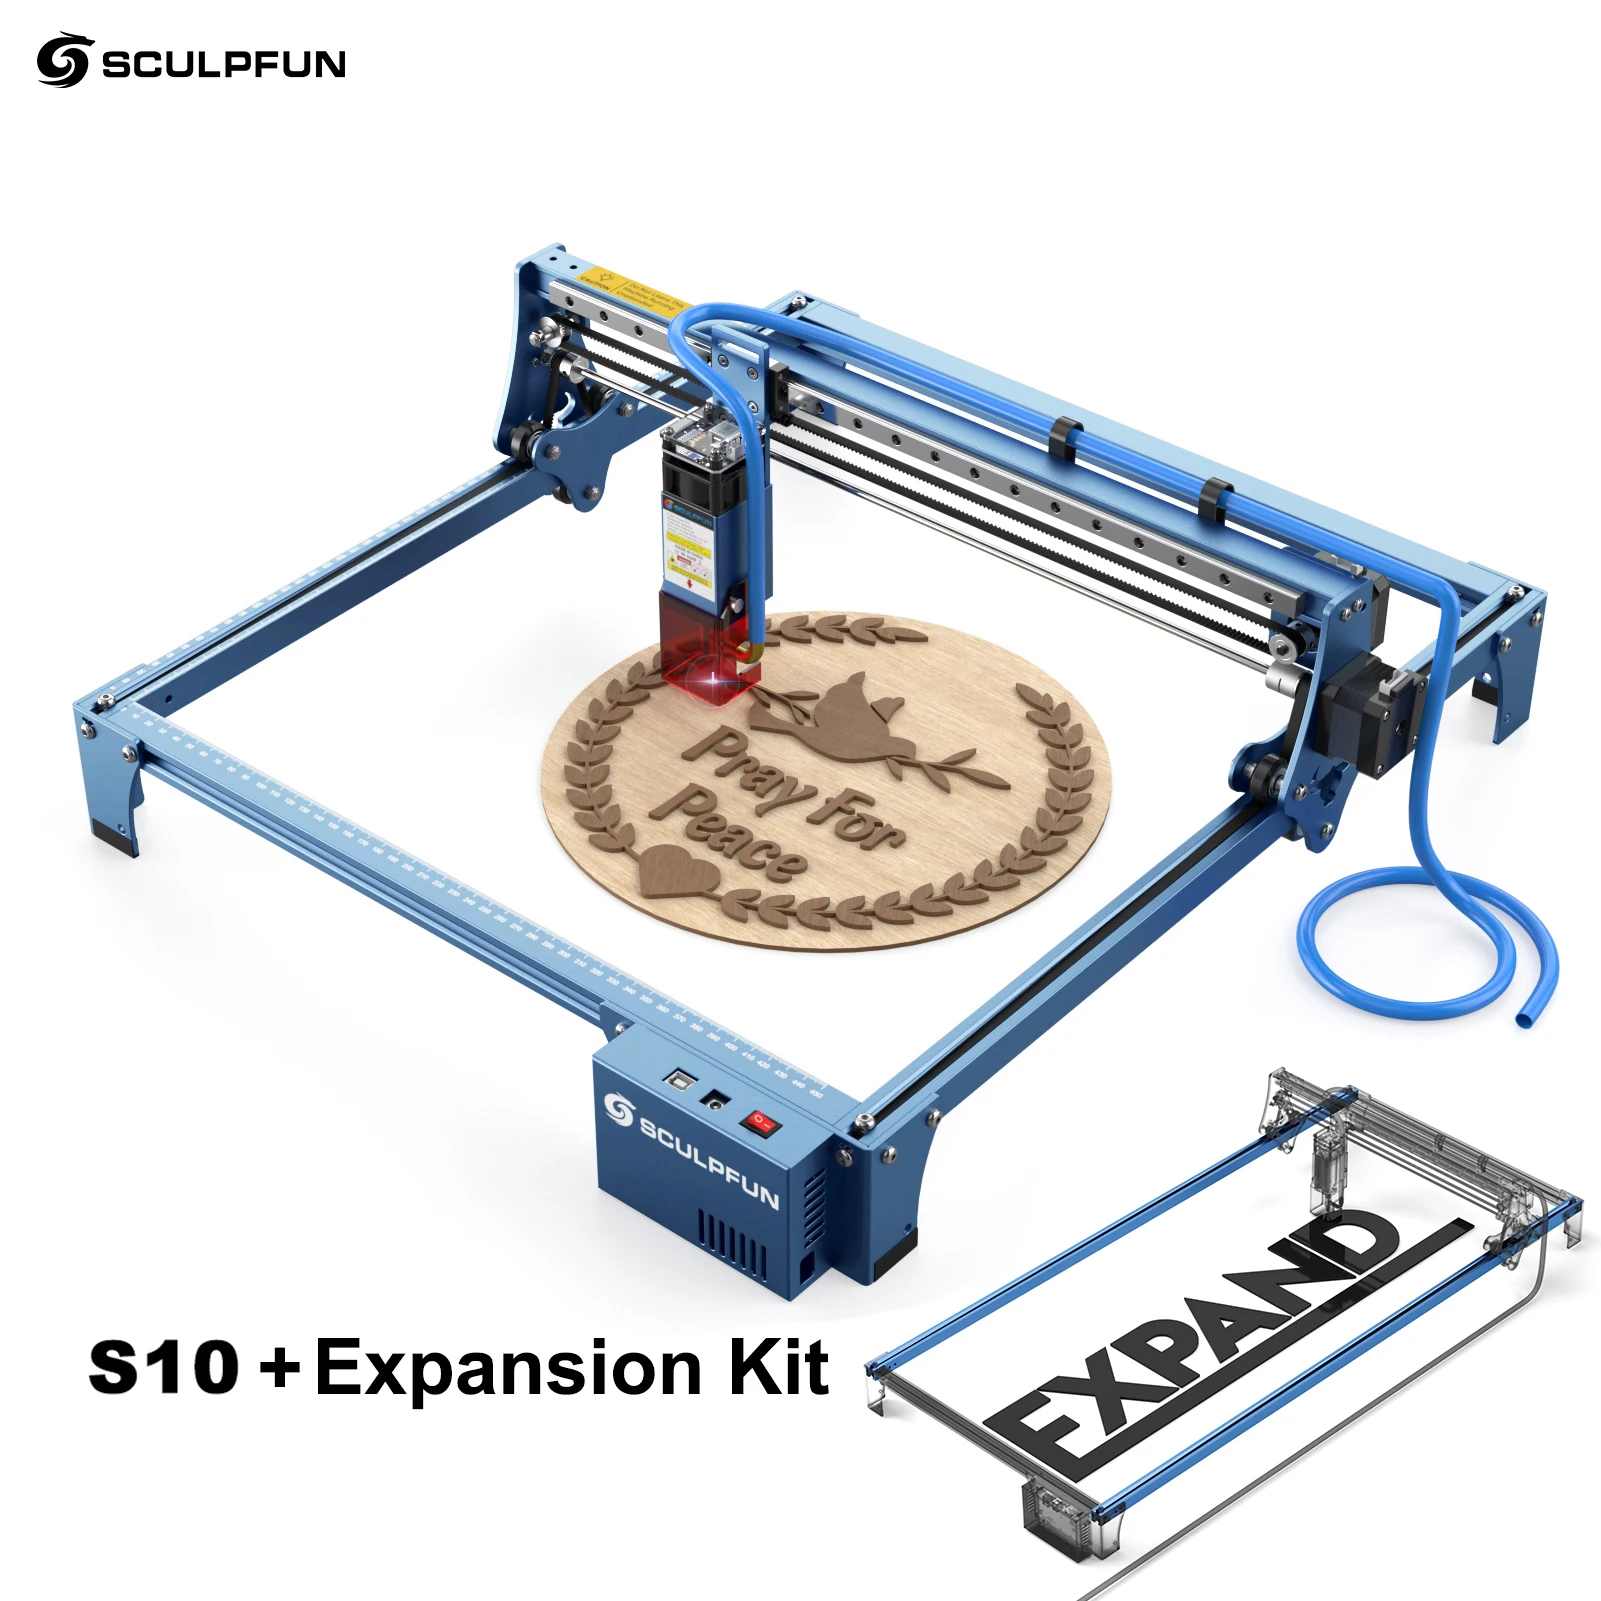 S10-Extension kit